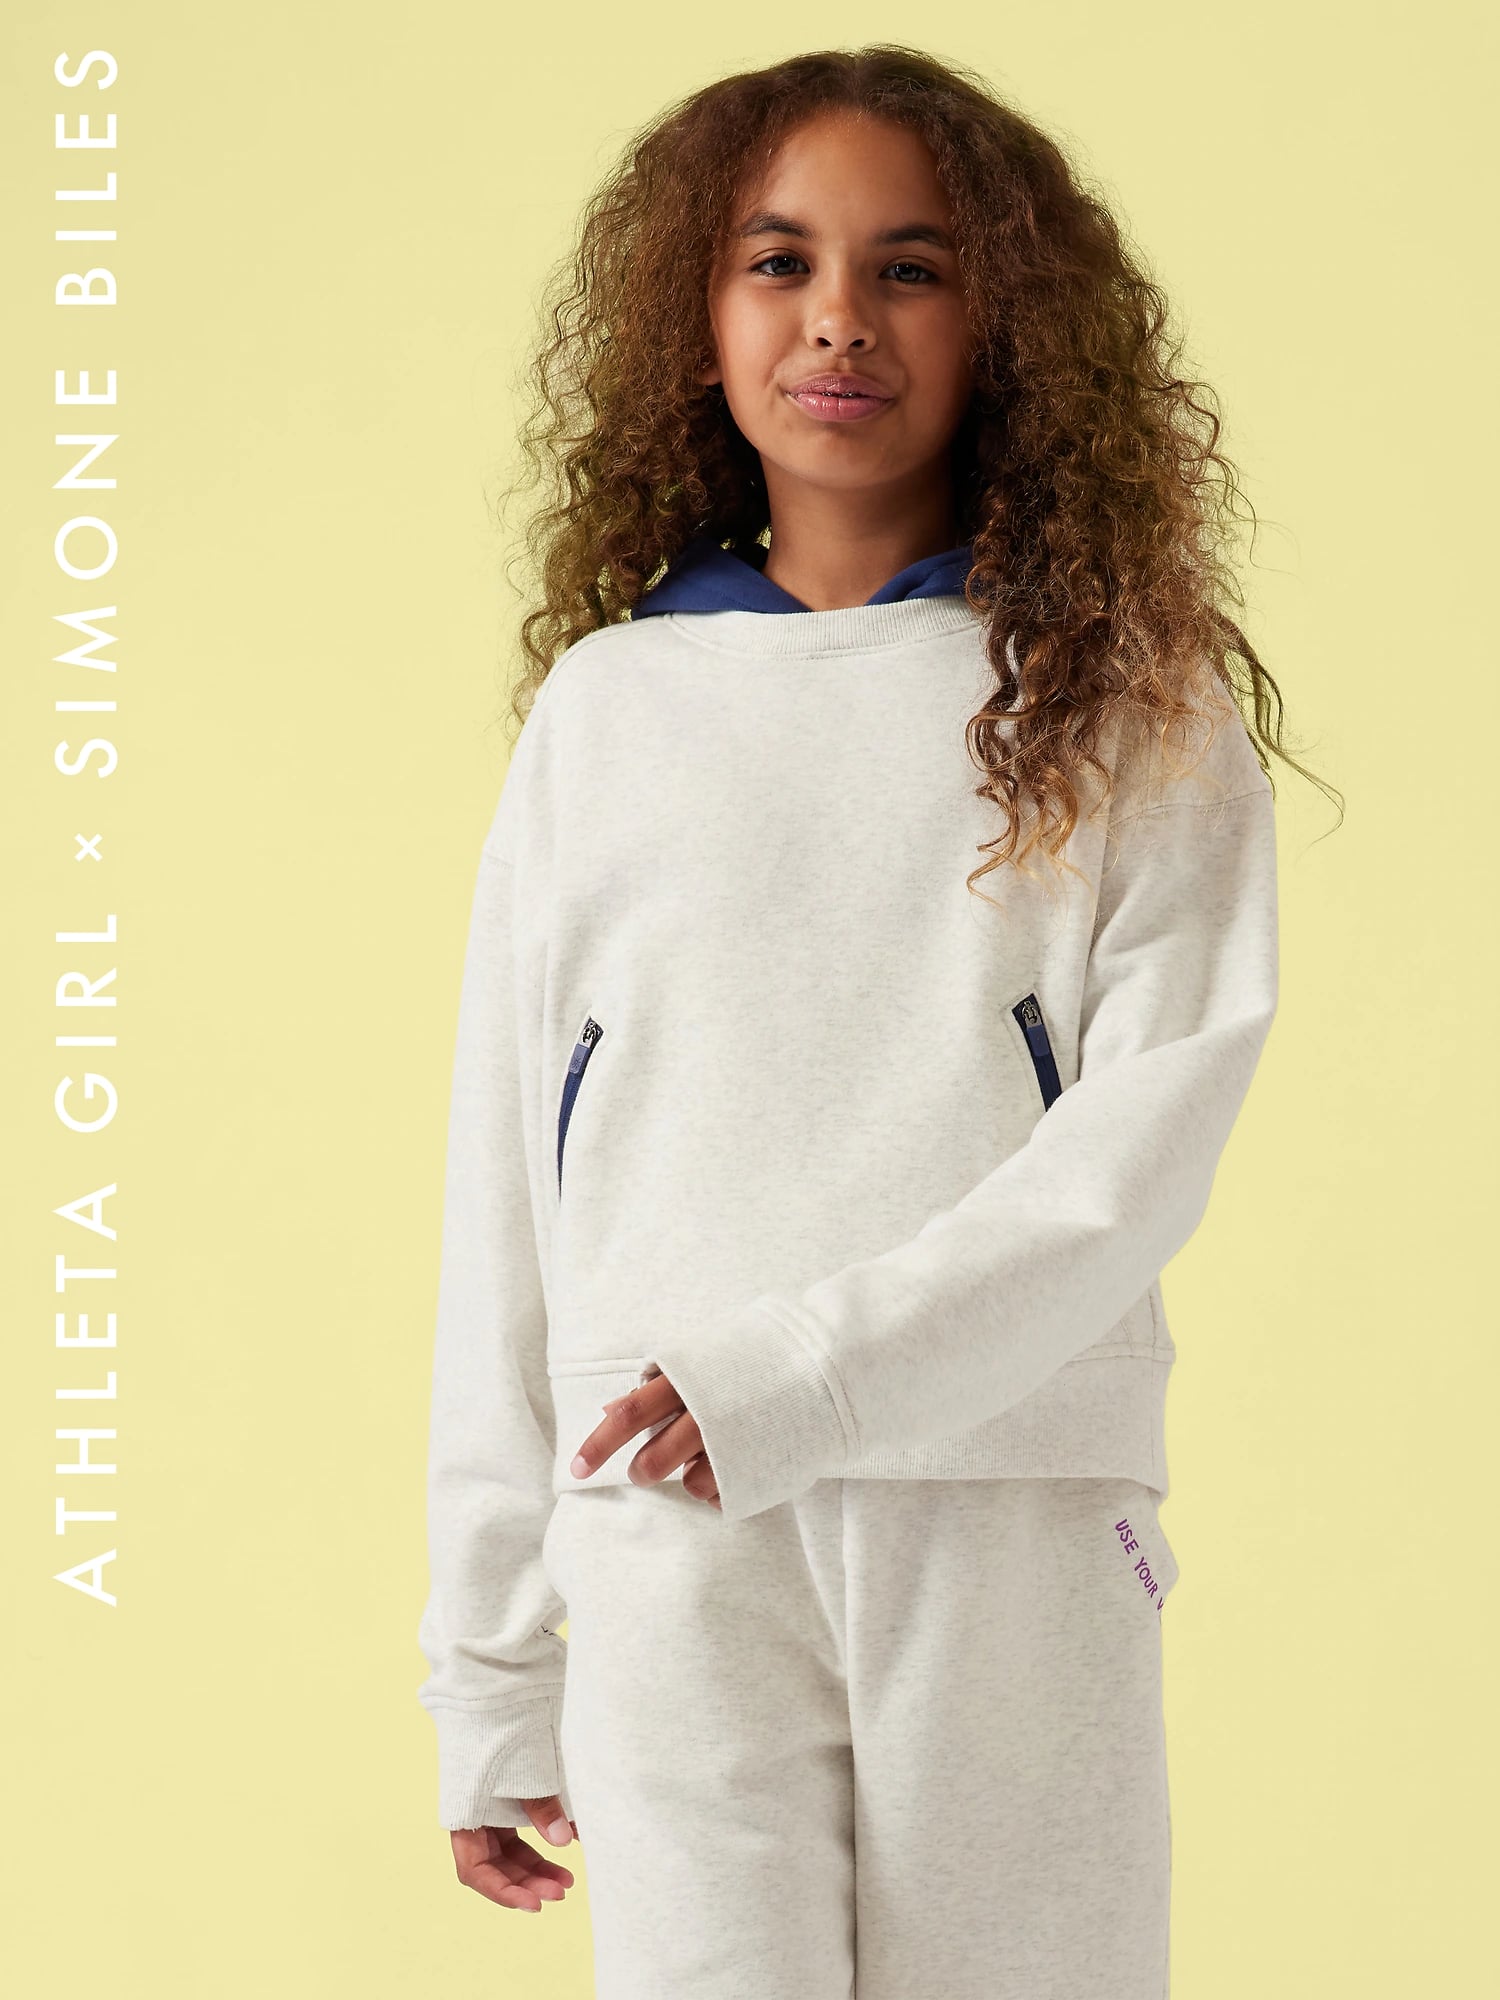 Athleta Girls x Simone Biles: Shop bike shorts, sweatshirts and athletic  tops